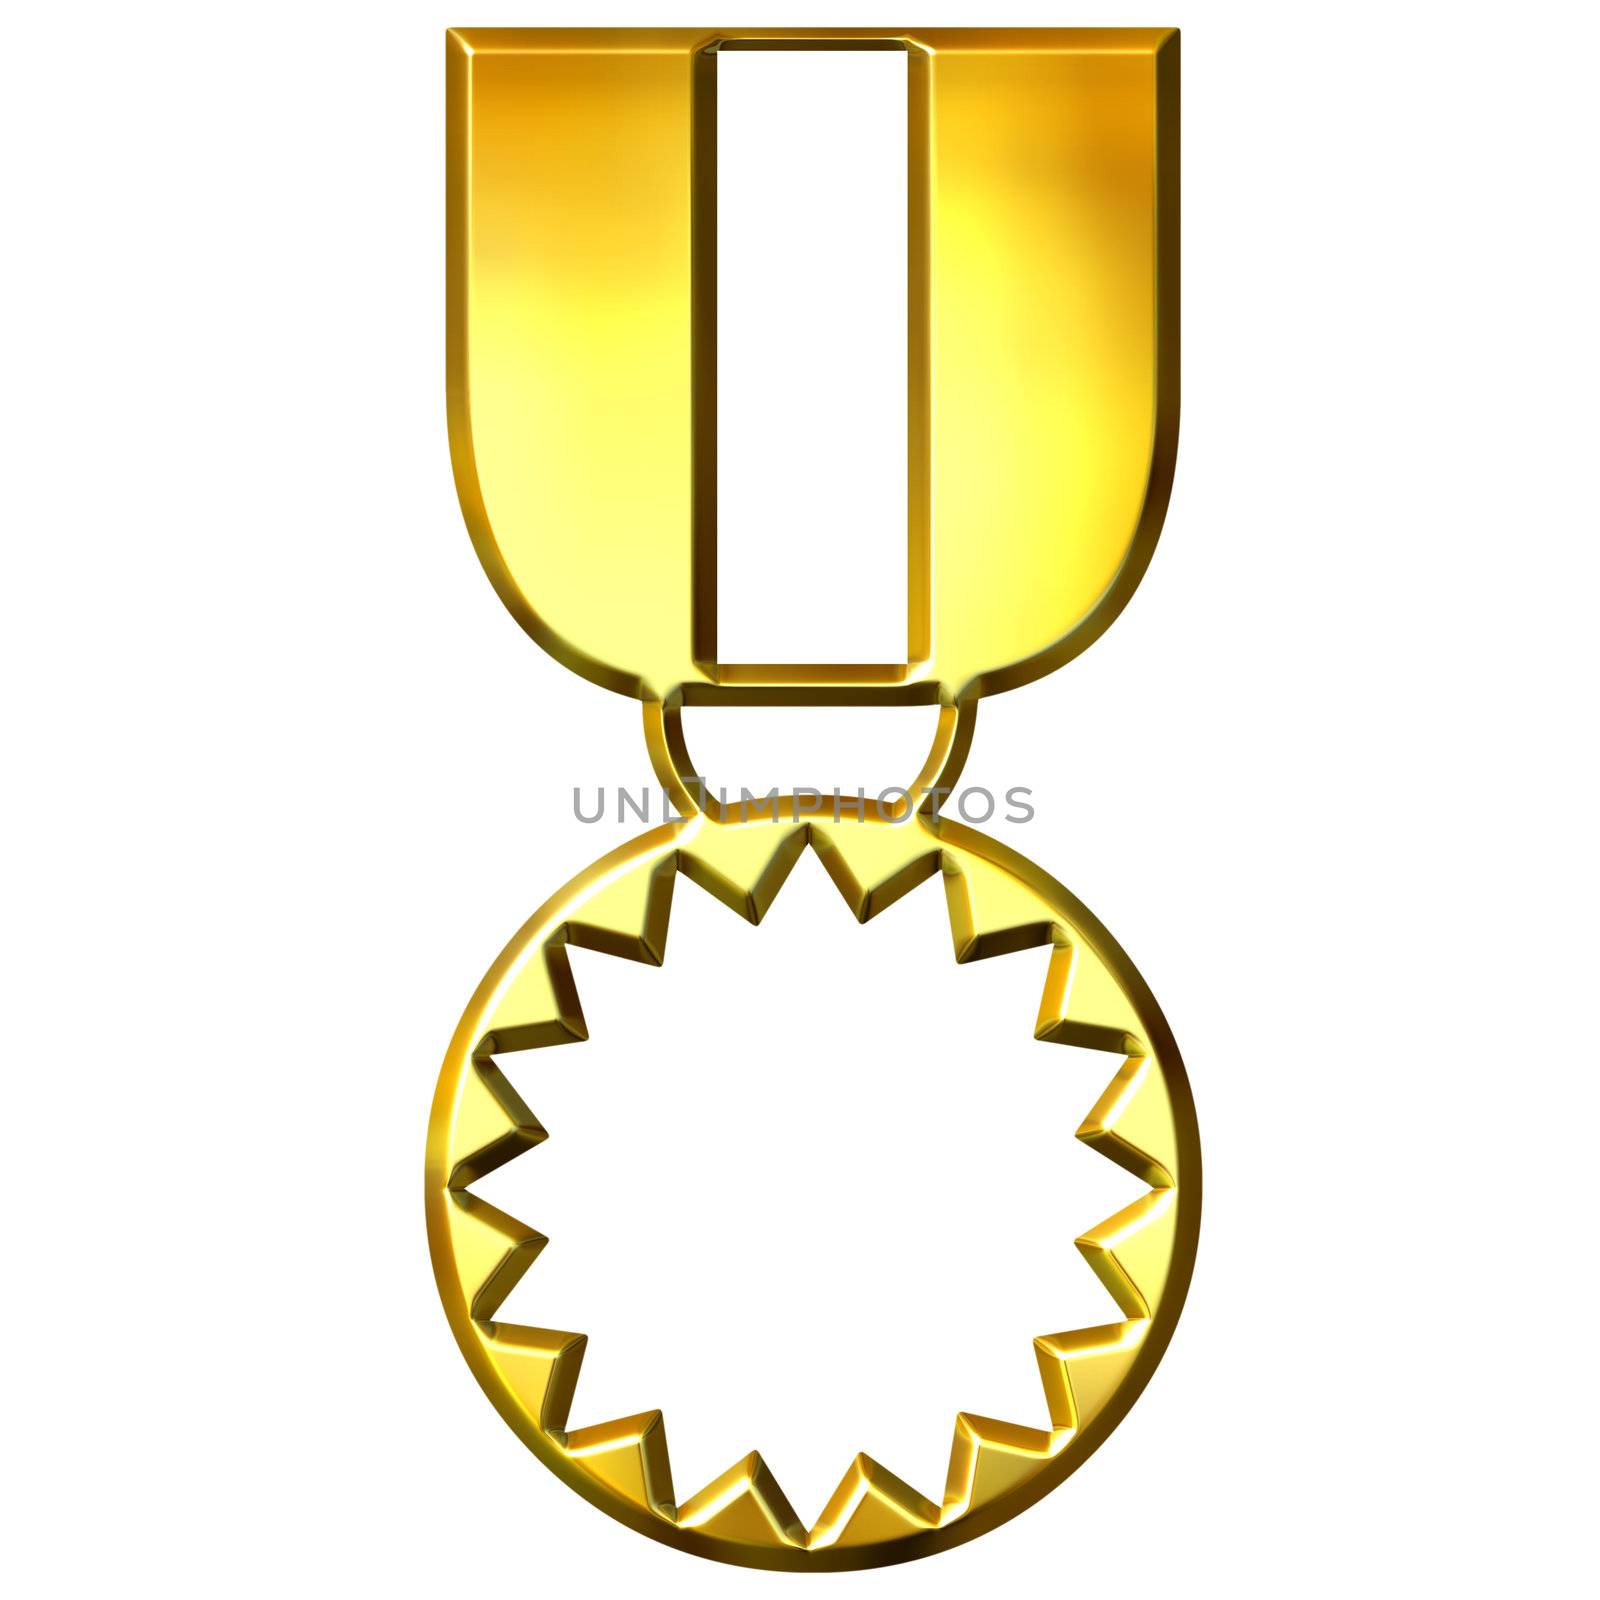 3d golden medal of honour isolated in white